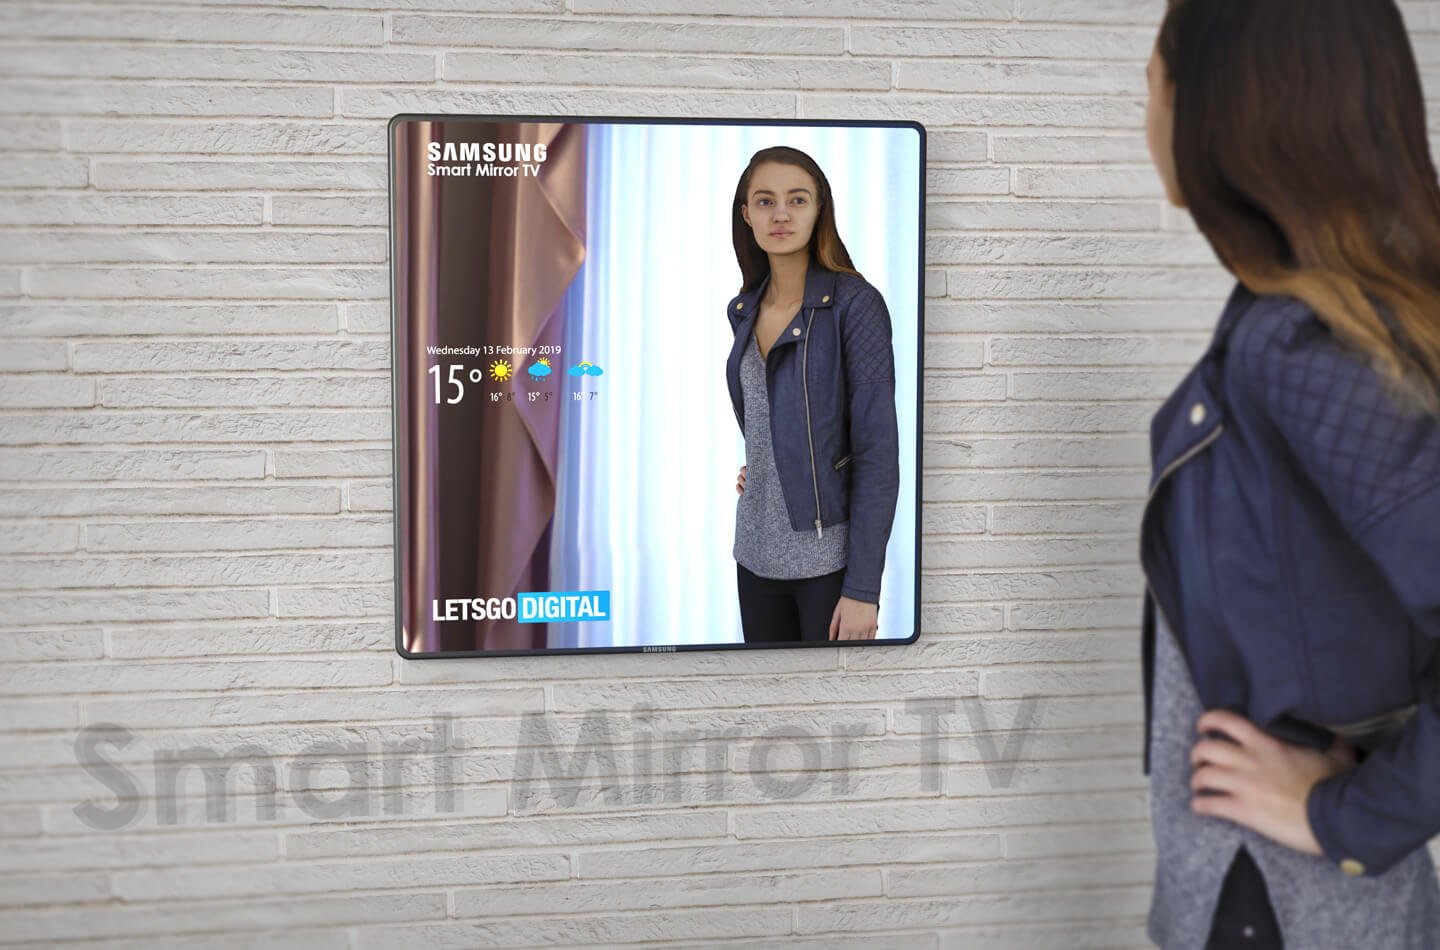 Mirror pc to samsung smart tv